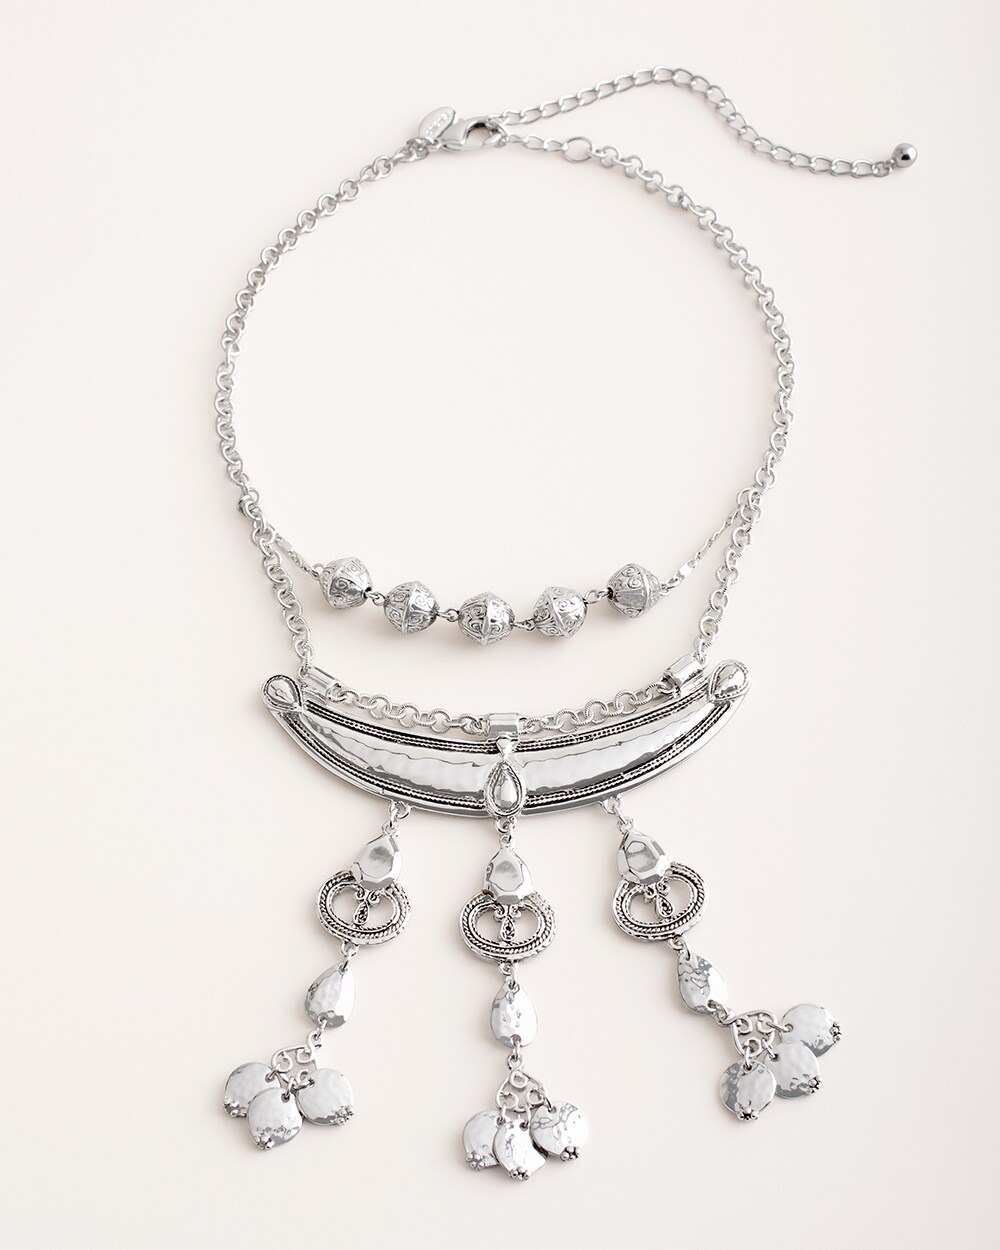 Short Sleek Silver-Tone Bib Necklace